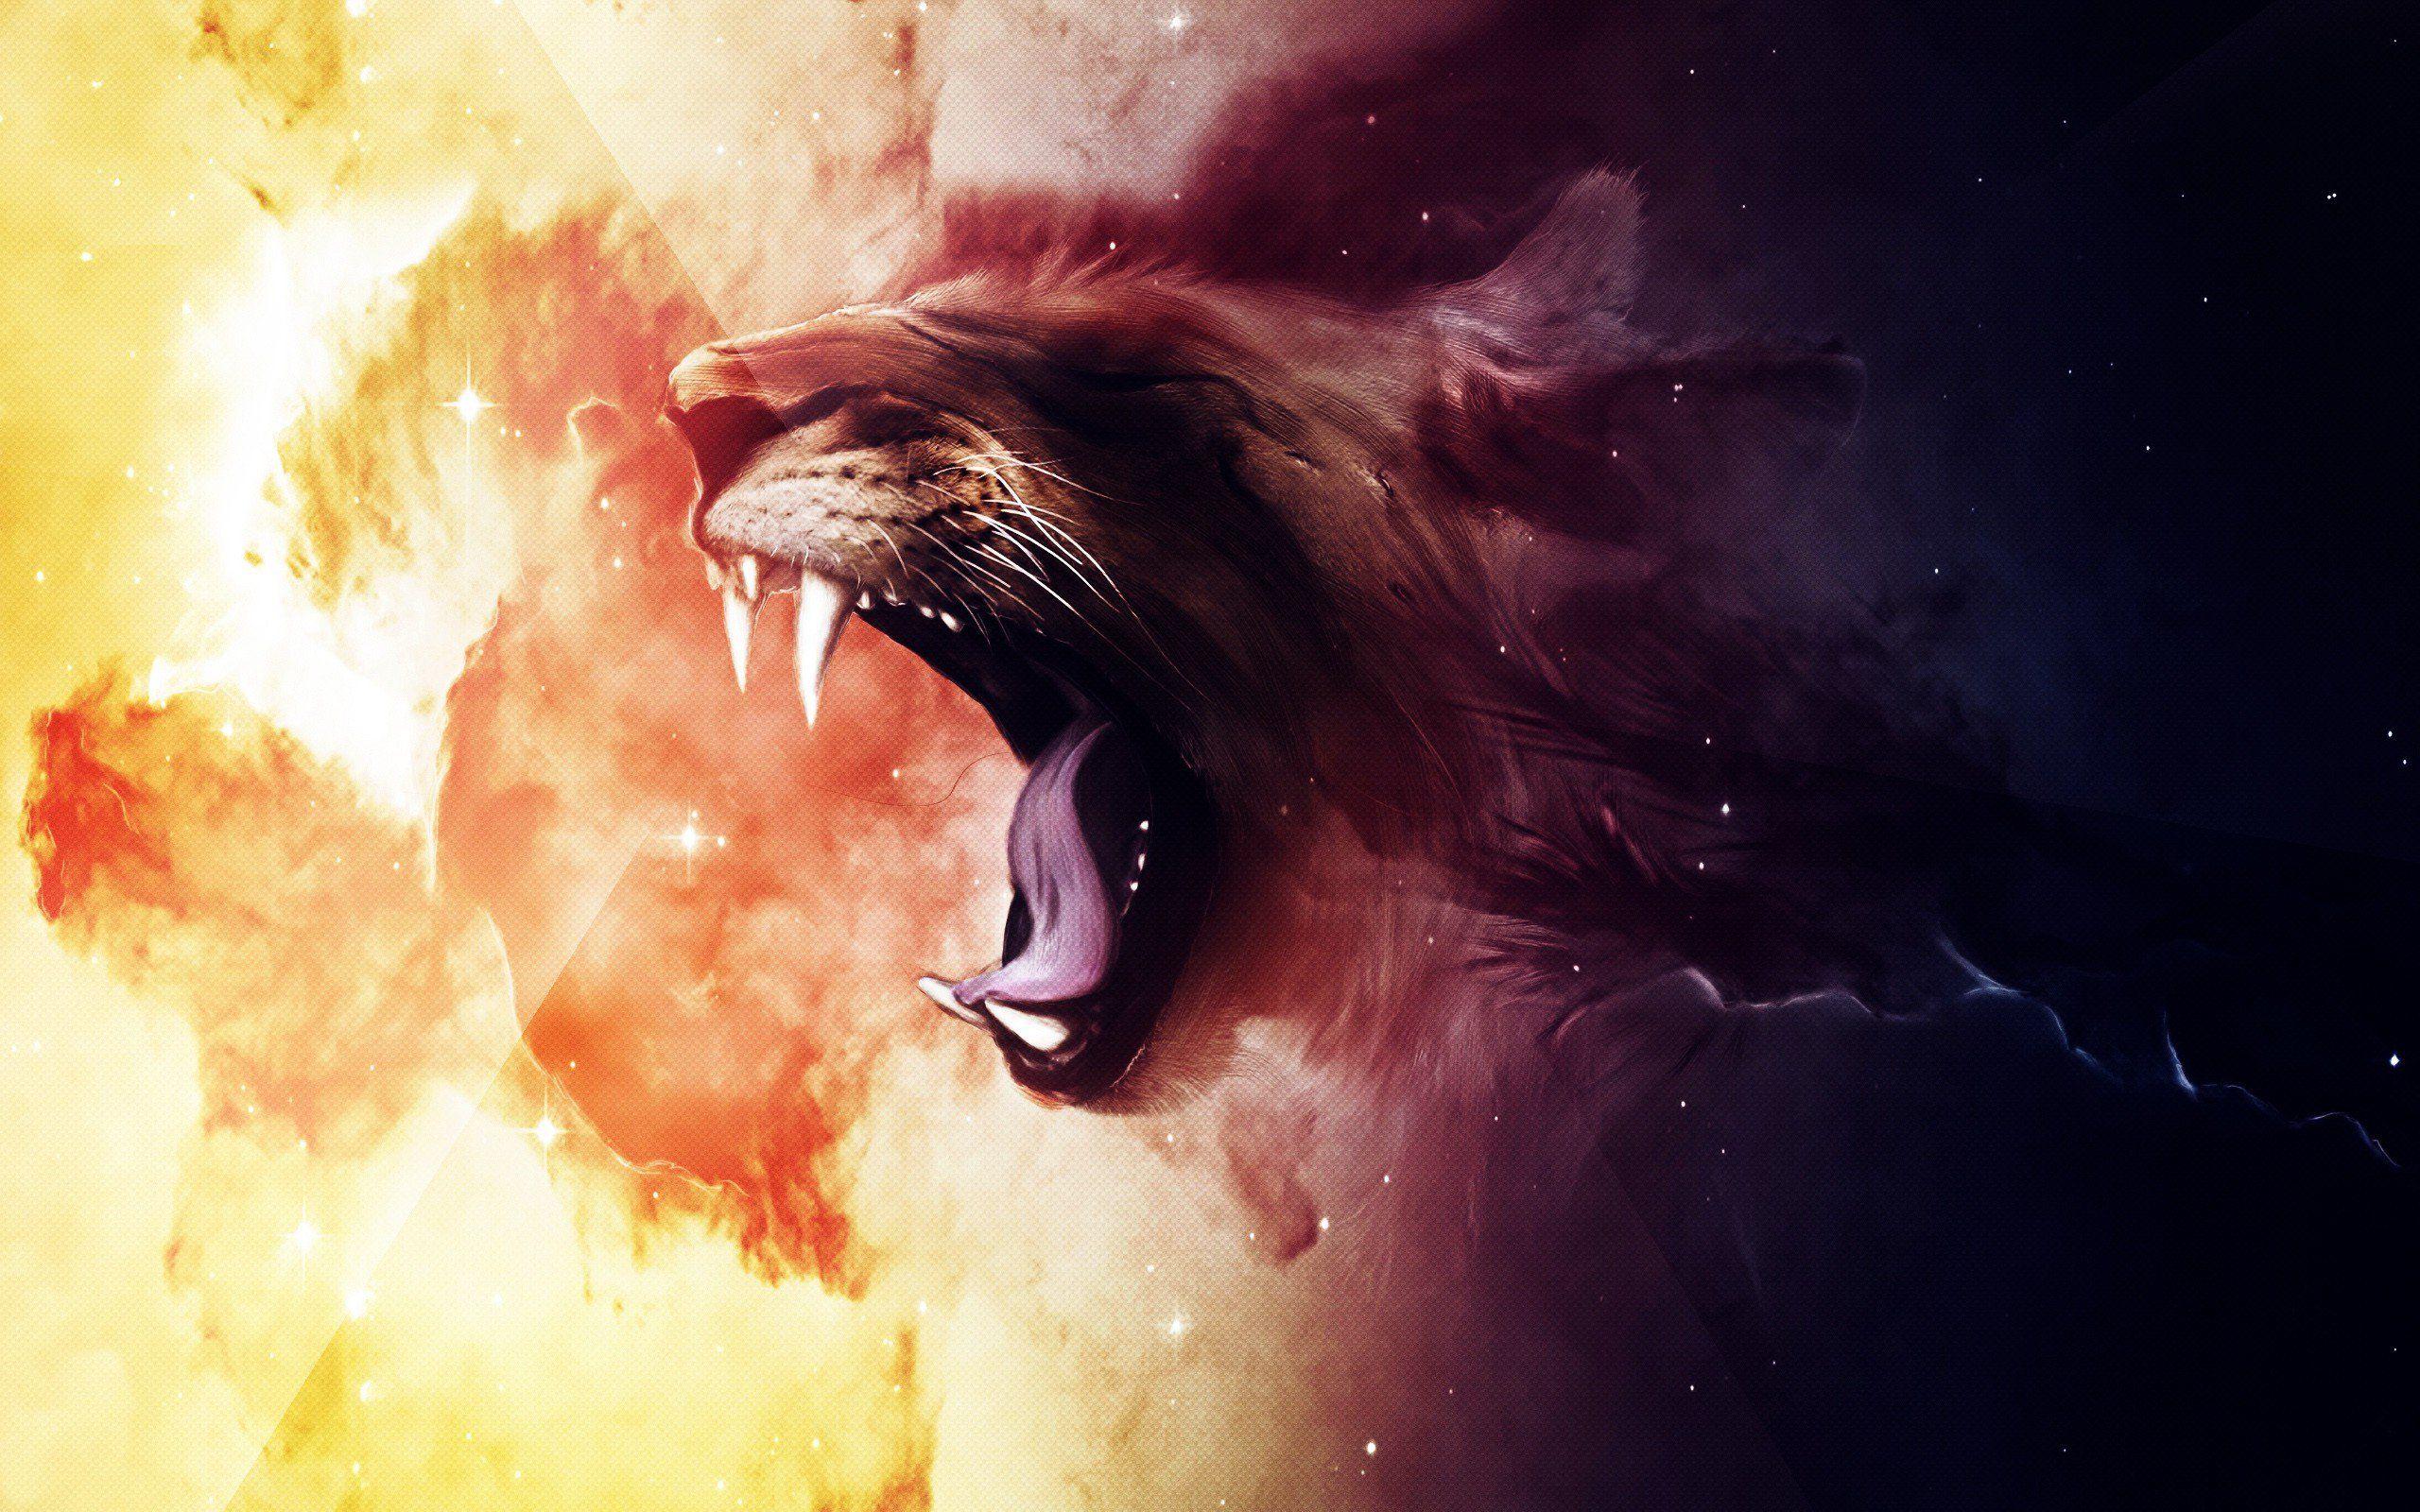 Roaring Lion, HD Creative, 4k Wallpaper, Image, Background